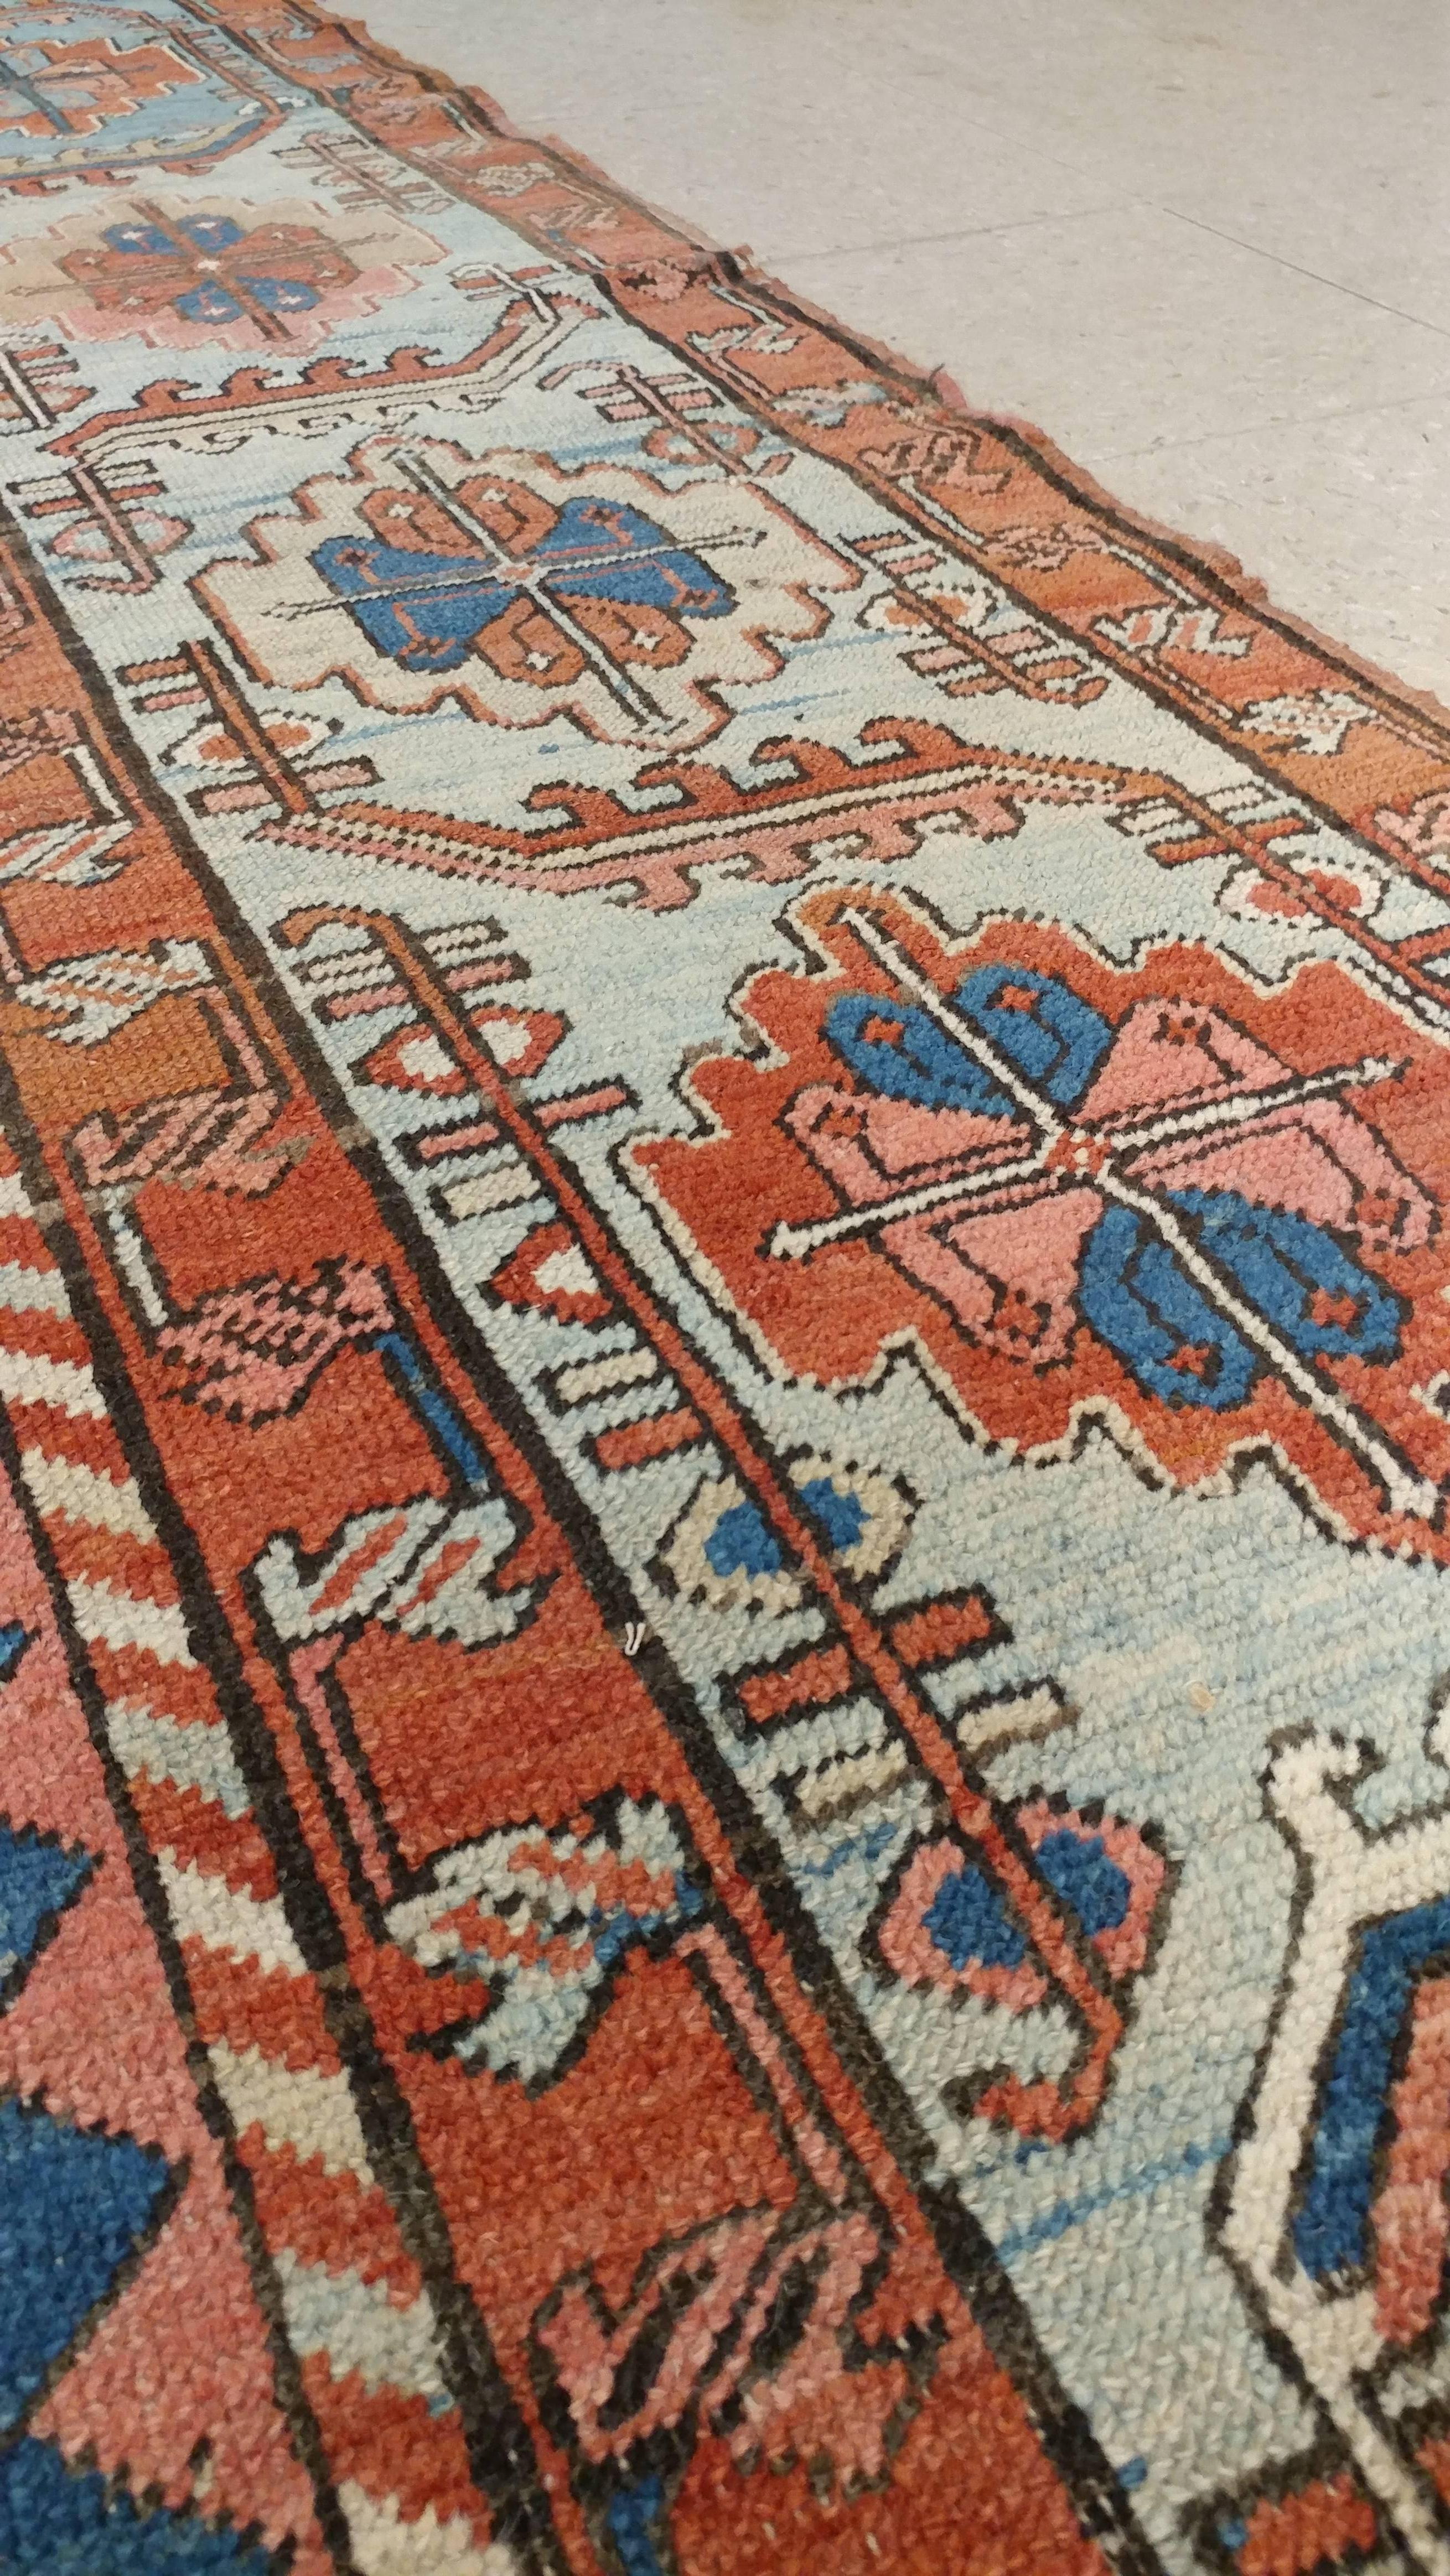 Hand-Knotted Antique Persian Serapi Carpet, Handmade Wool Oriental Rug, Gold-Ivory Light Blue